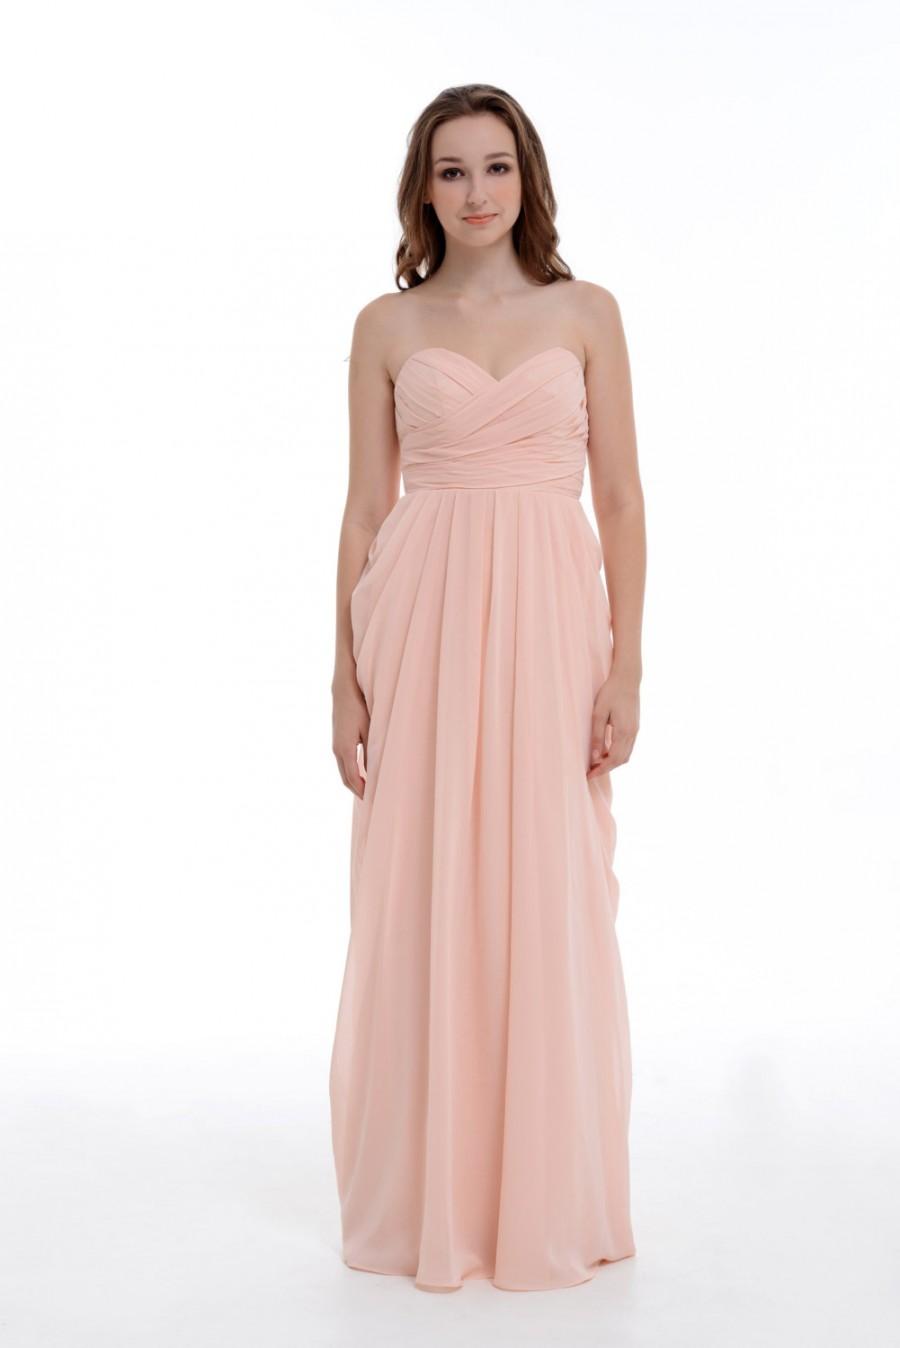 Wedding - Prom Dress 2015, Sweetheart Pearl Pink A-Line/Princess Floor-Length Chiffon Bridesmaid Dress With Ruffle